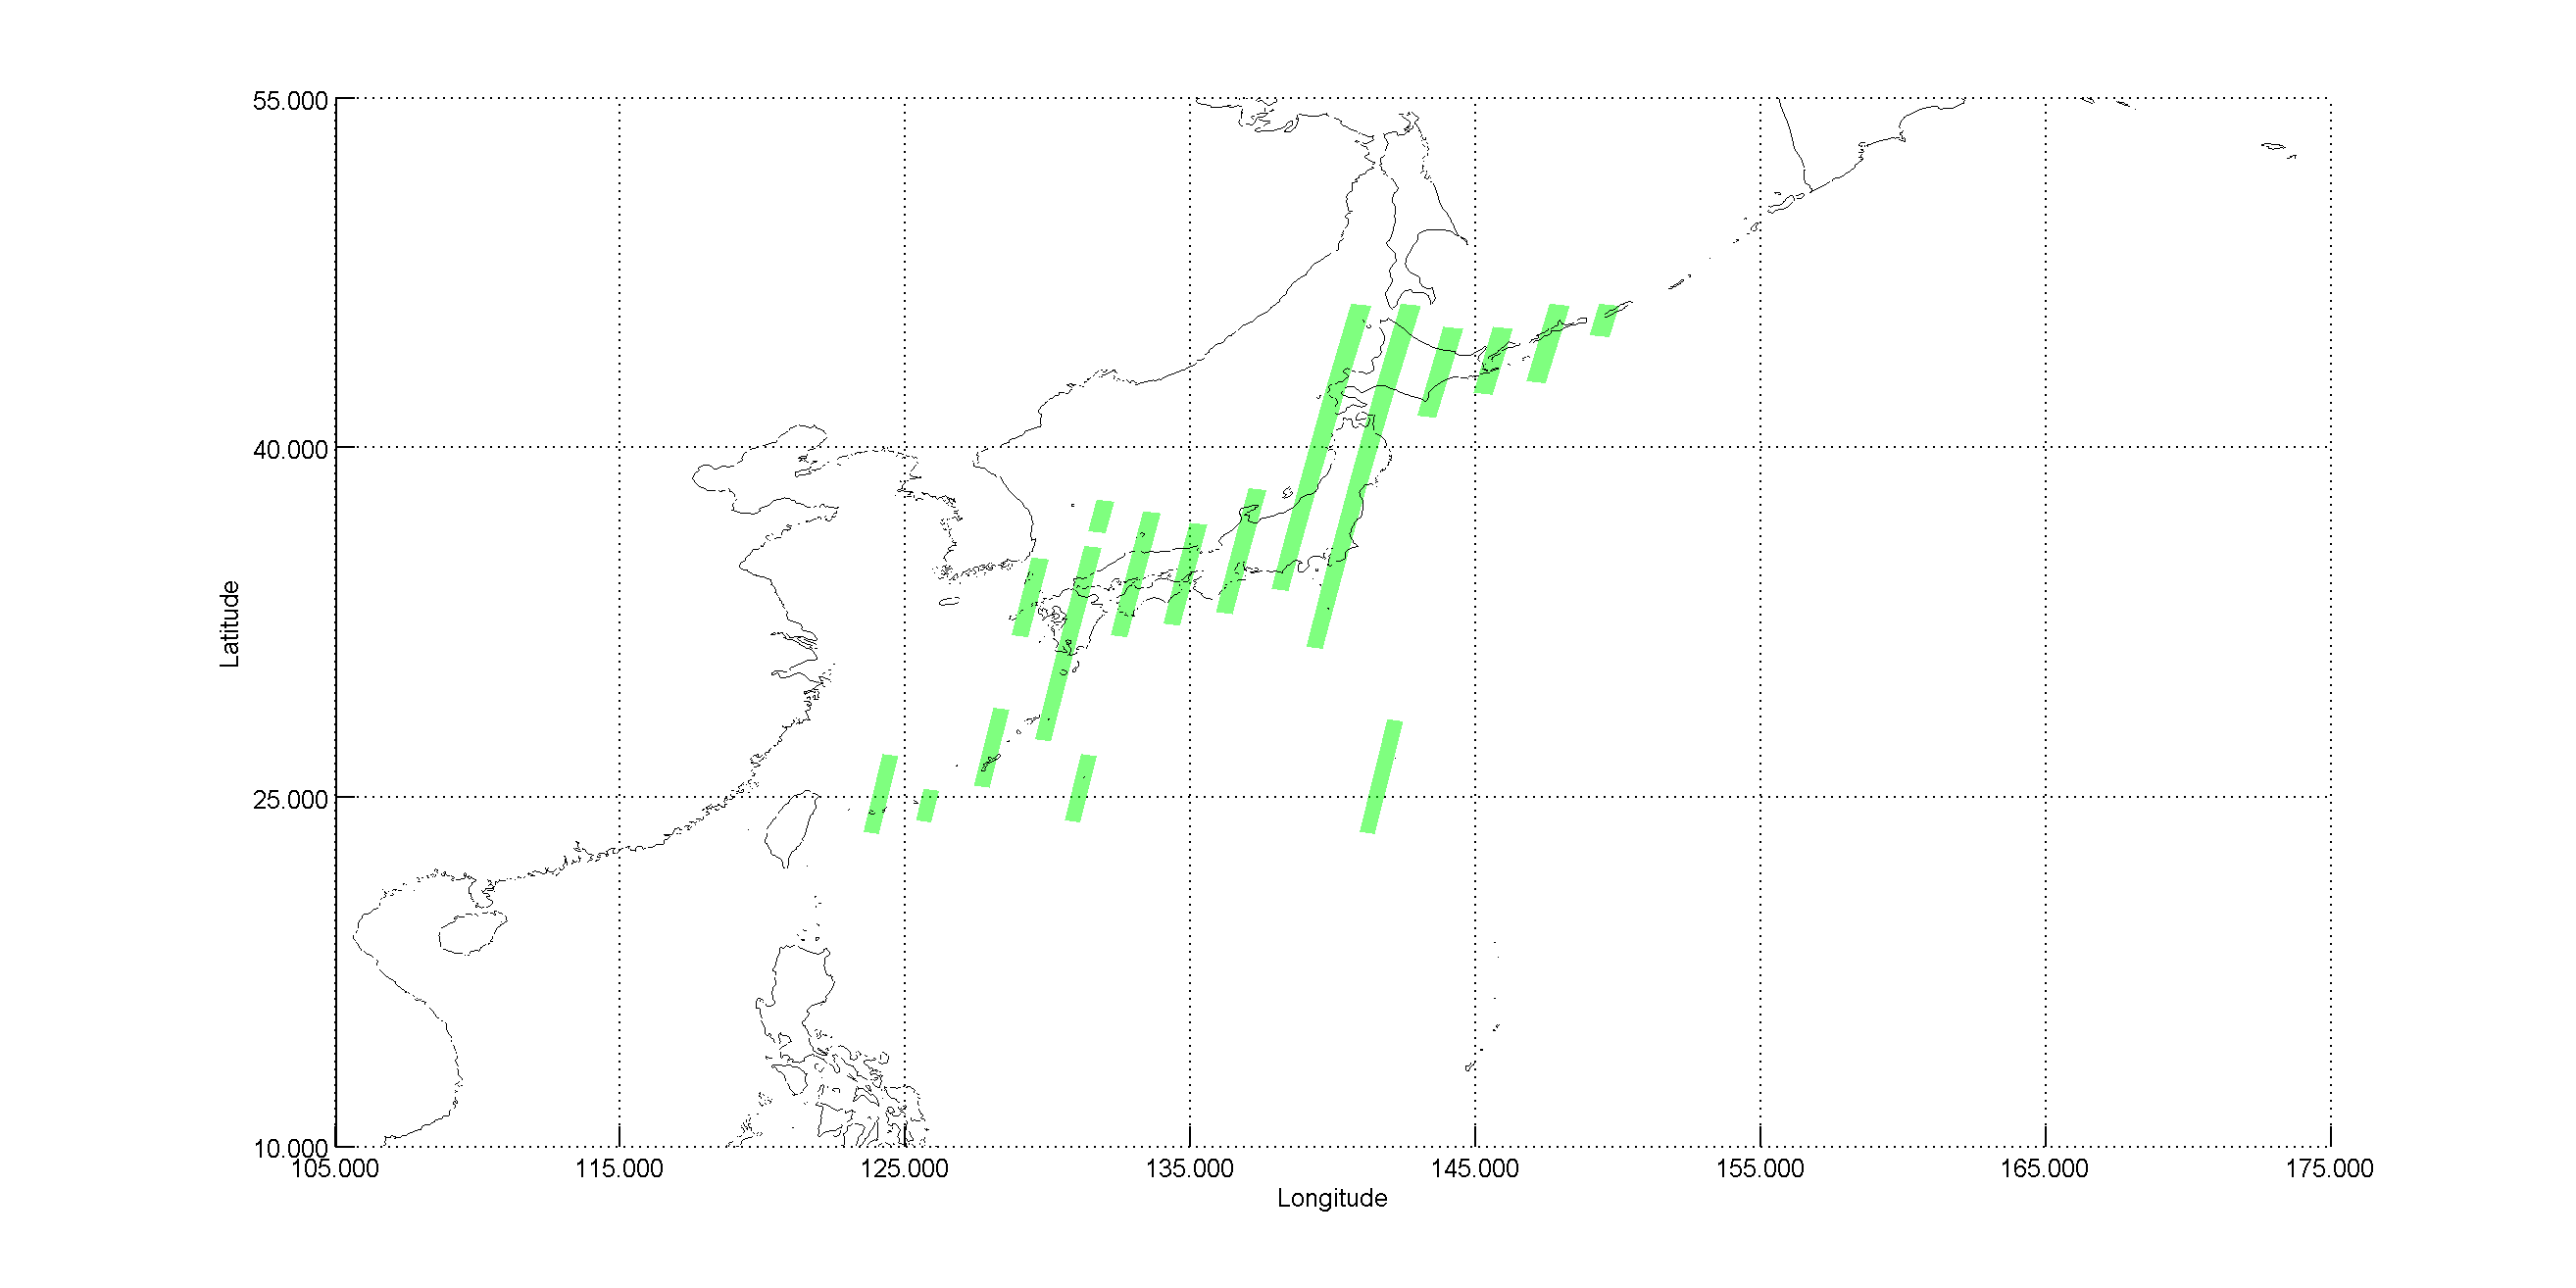 CYCLE_159 - Japan Descending passes